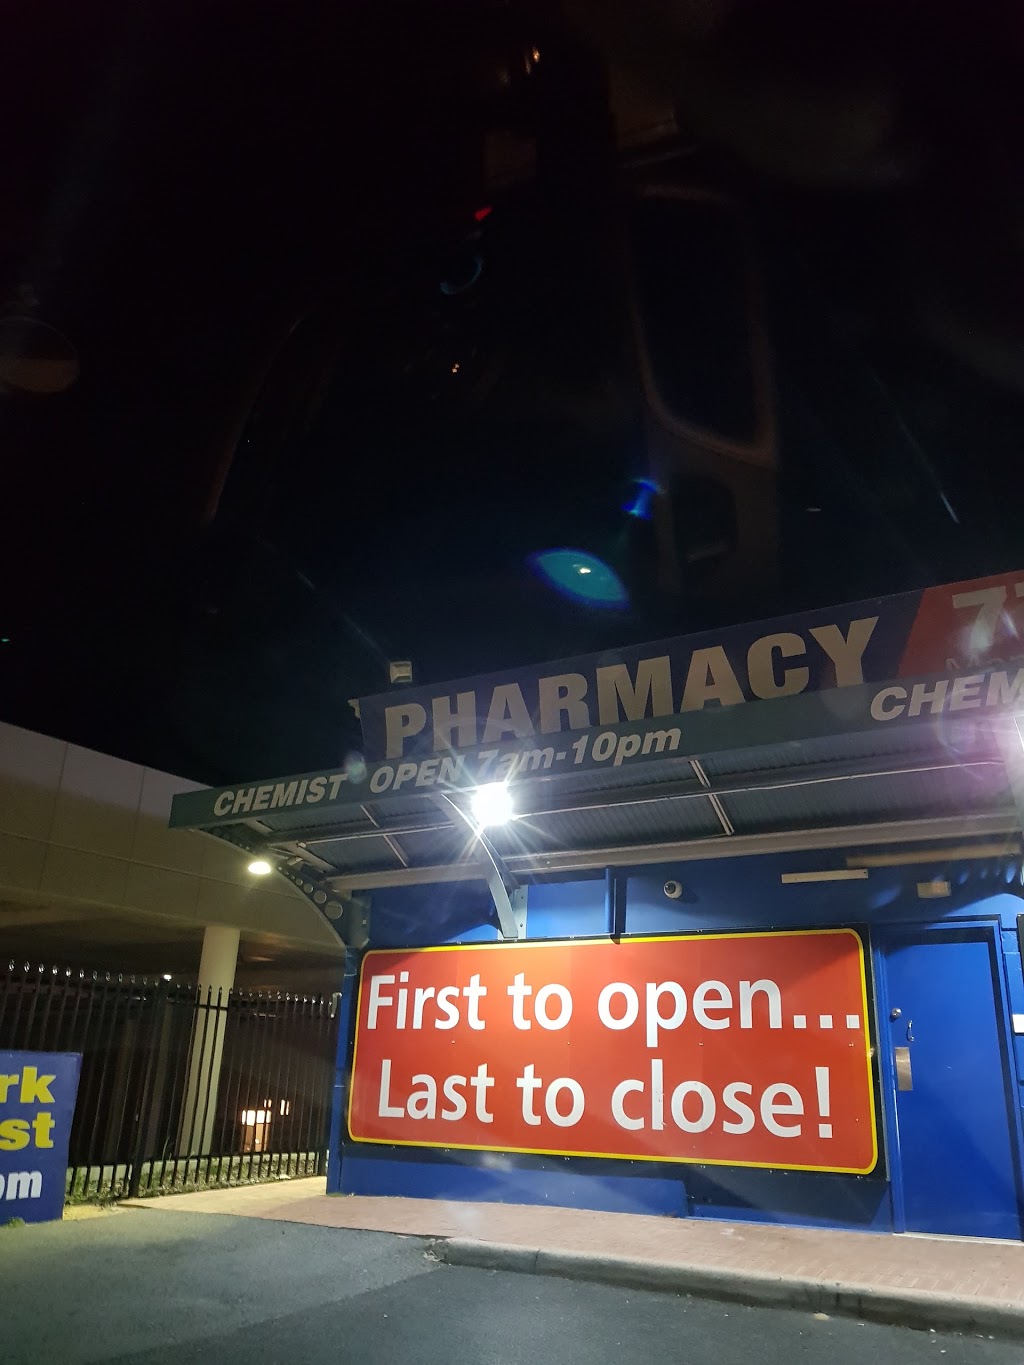 Pharmacy 777 Mandurah | pharmacy | 7 Dower St, Mandurah WA 6210, Australia | 0895349000 OR +61 8 9534 9000